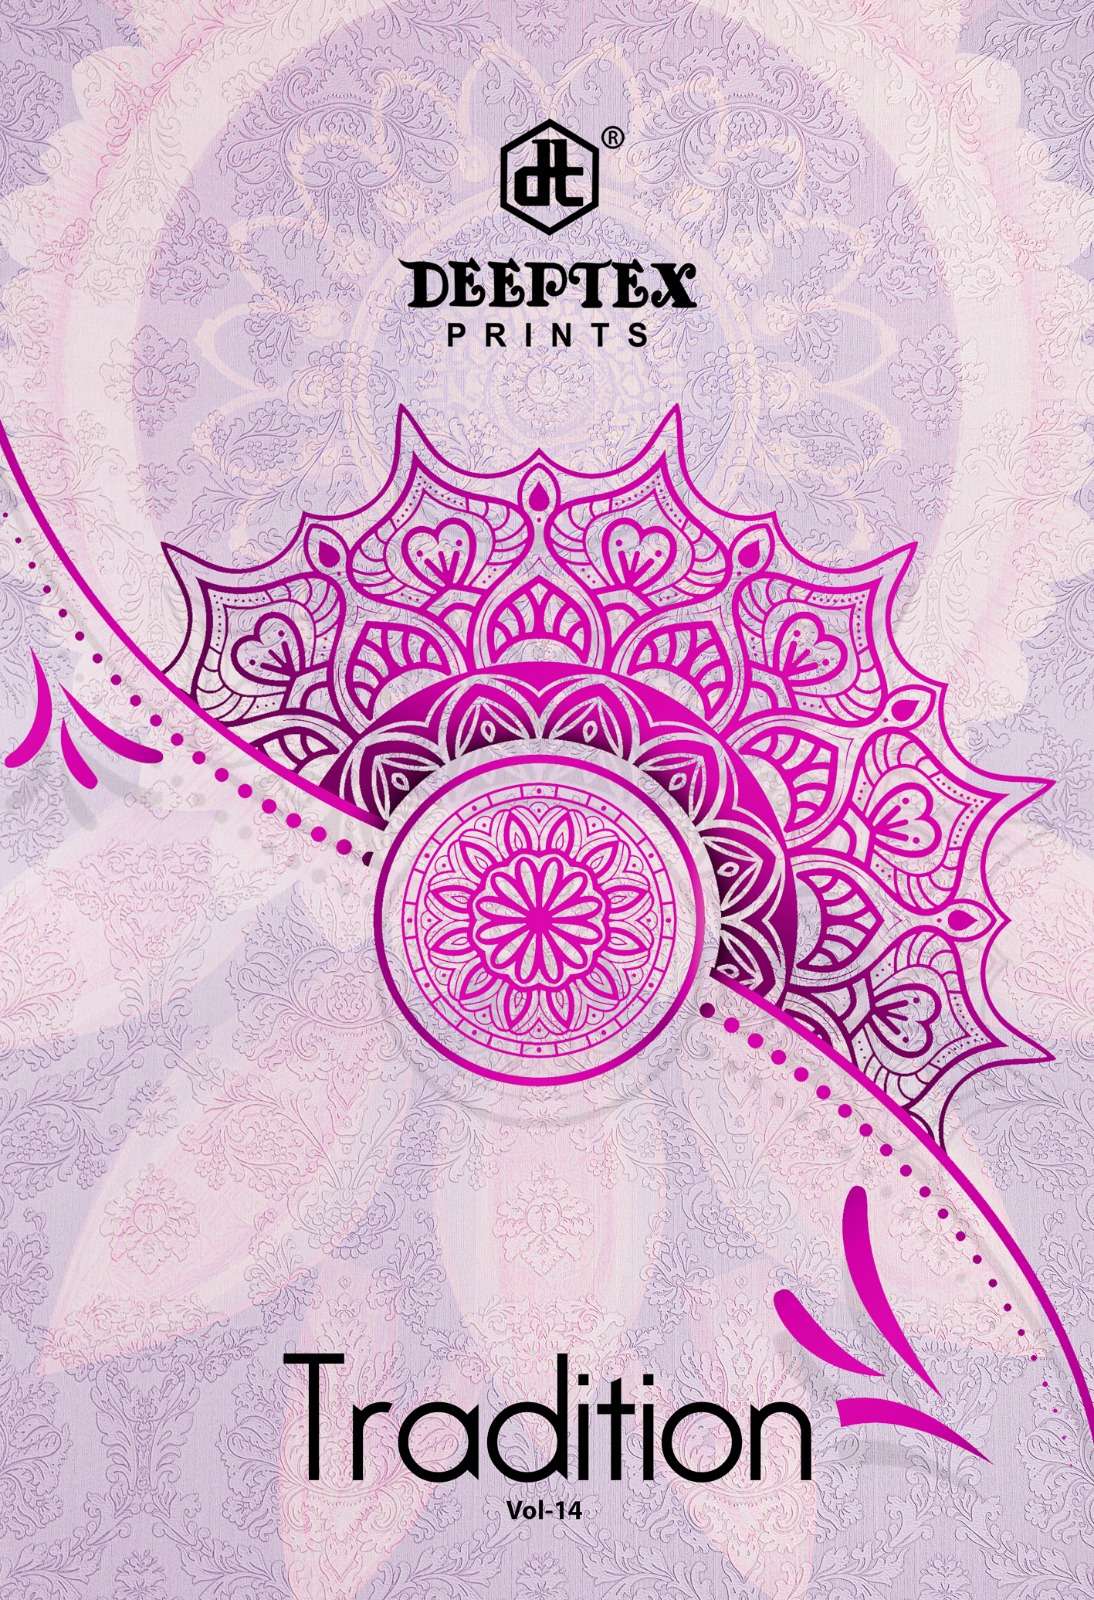 tradition vol 14 by deeptex prints cotton salwar suit 